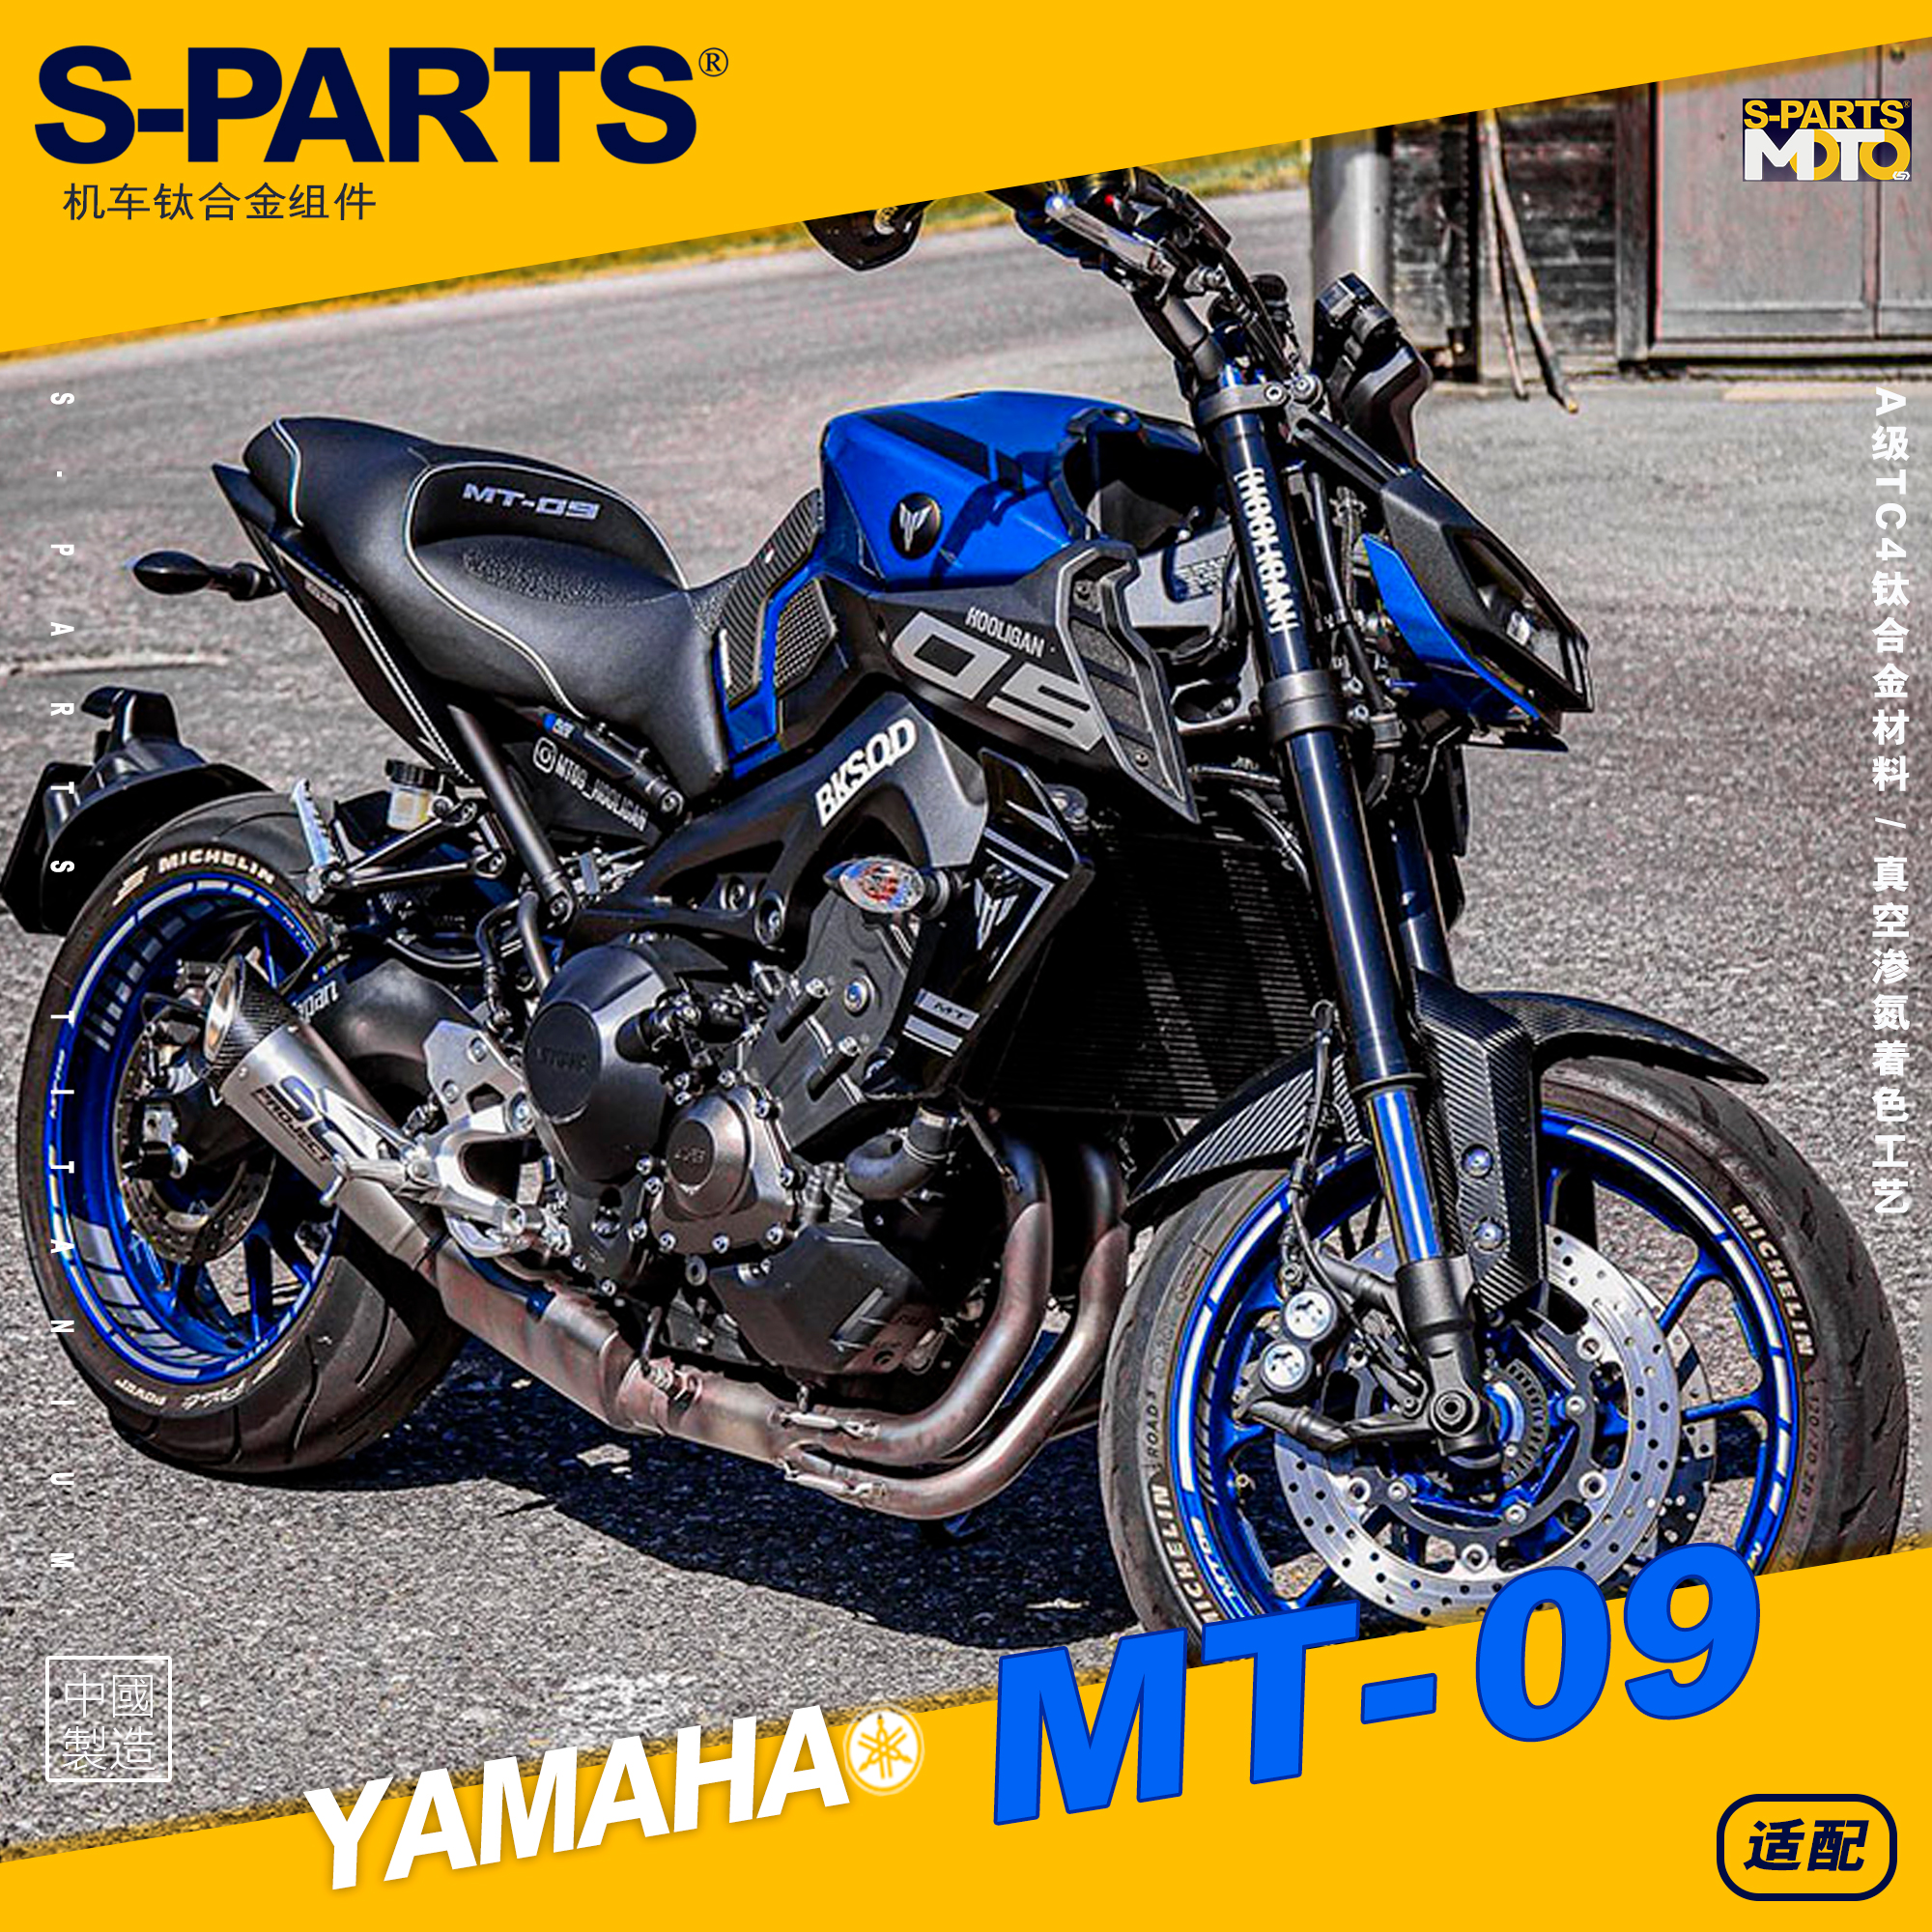 S-PARTS 钛合金螺丝 适用于YAMAHA MT09 螺栓摩托车改装套装 斯坦